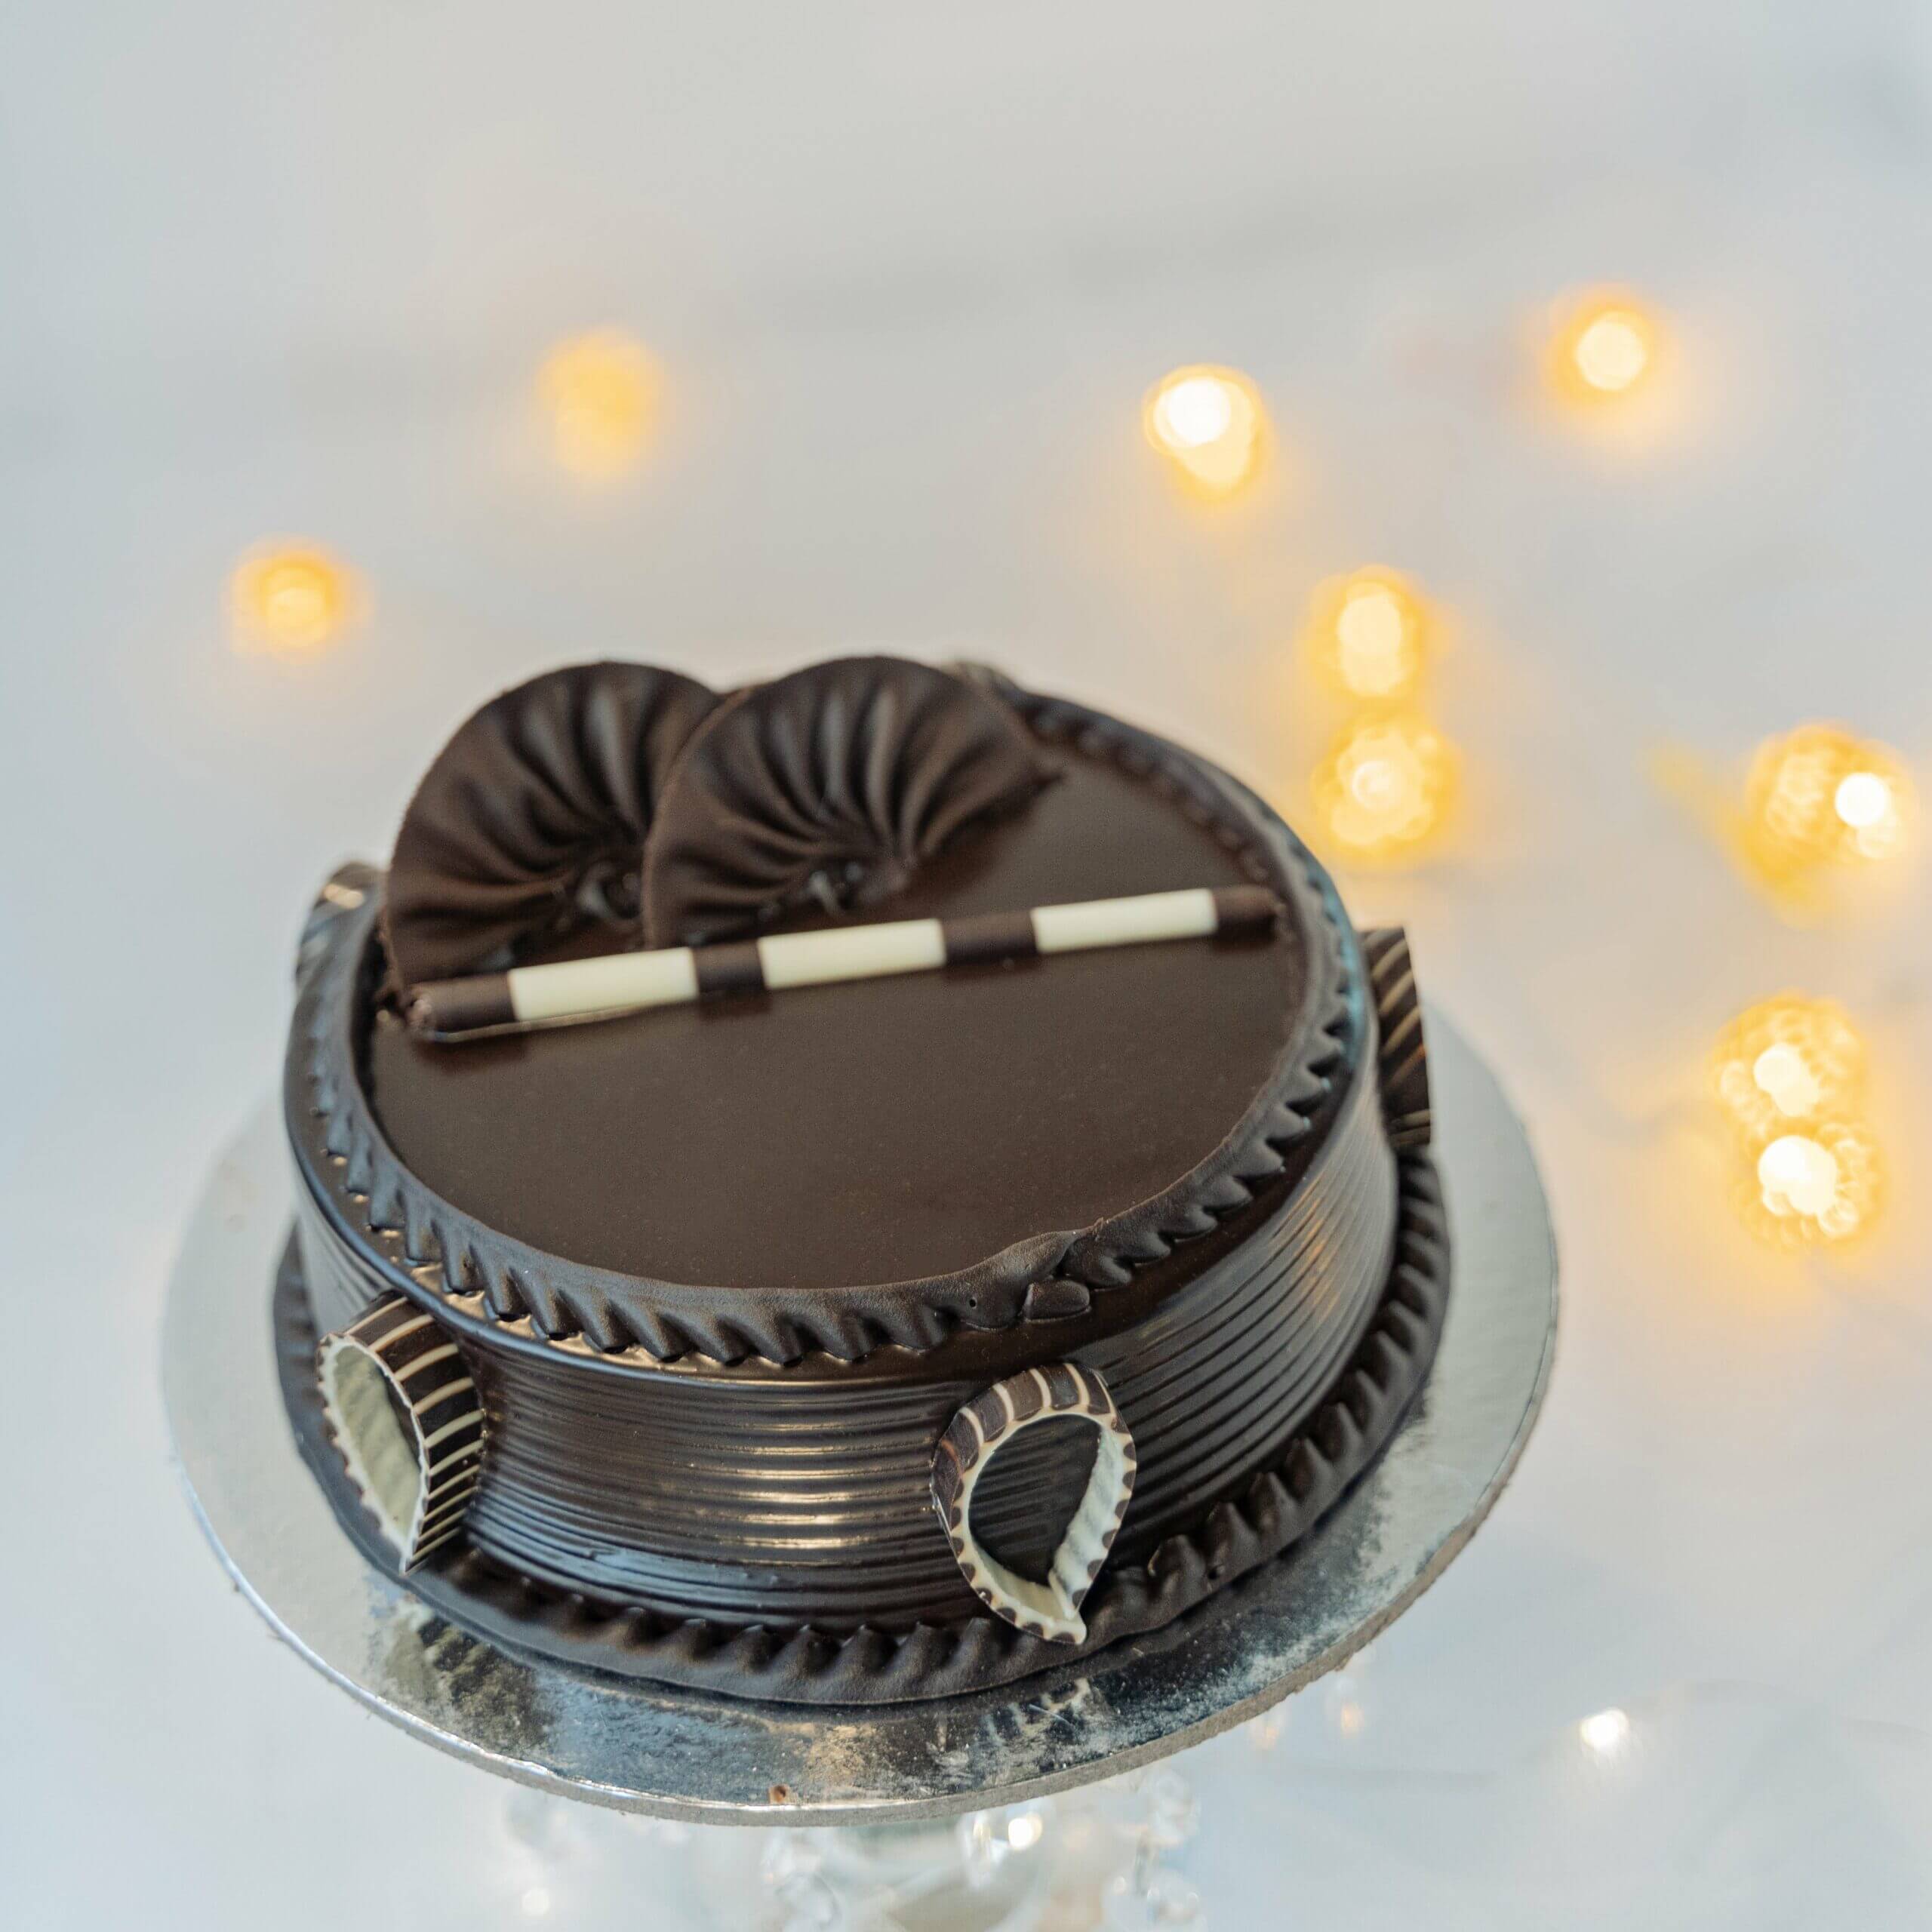 Chocolate Truffle Cake | Preeti Flowers